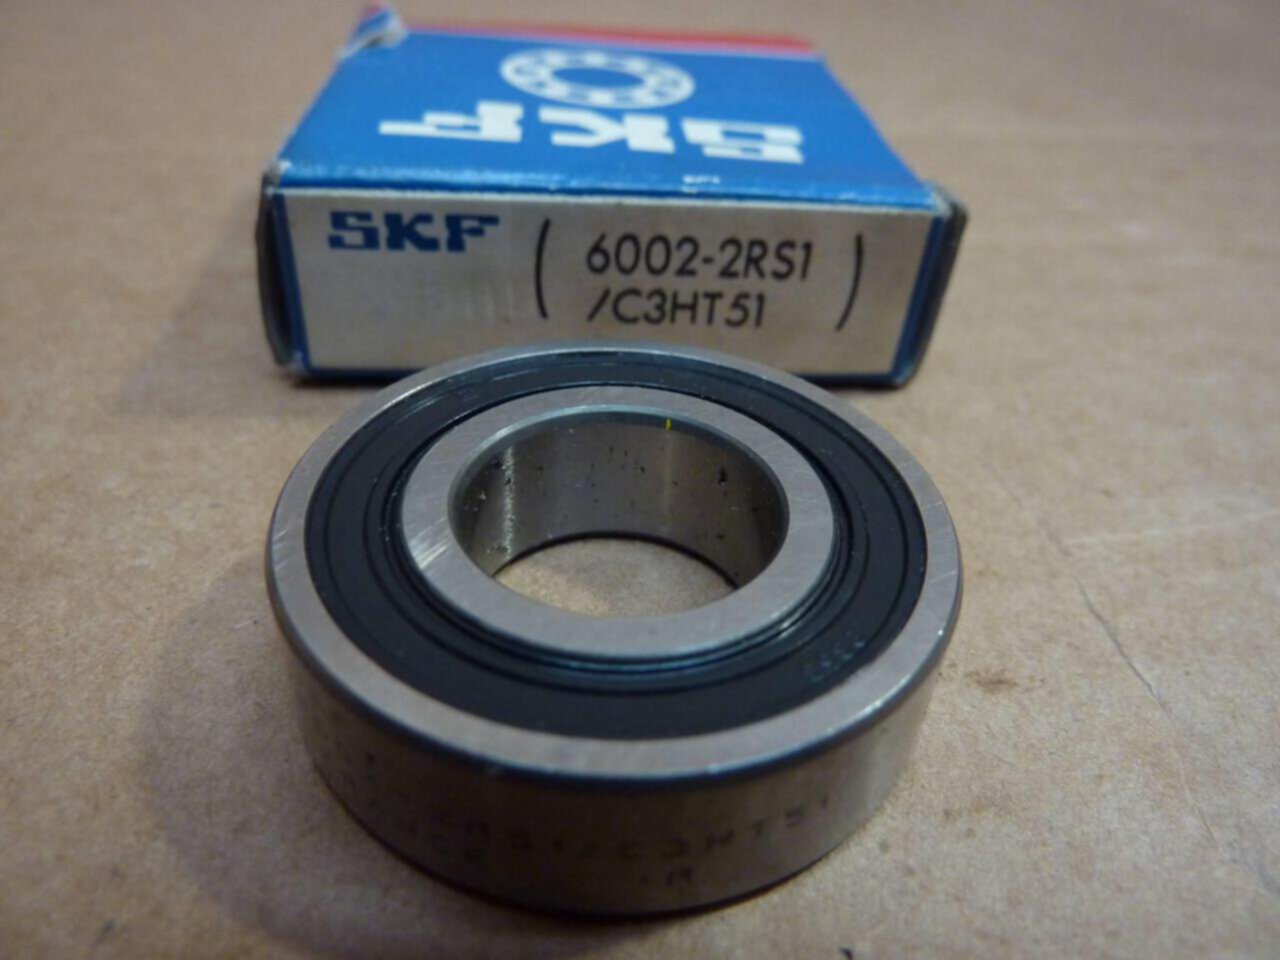 Skf Bearing 6002-2Rs1/C3Ht51 New #24823 | Ebay concernant Skf Bearing